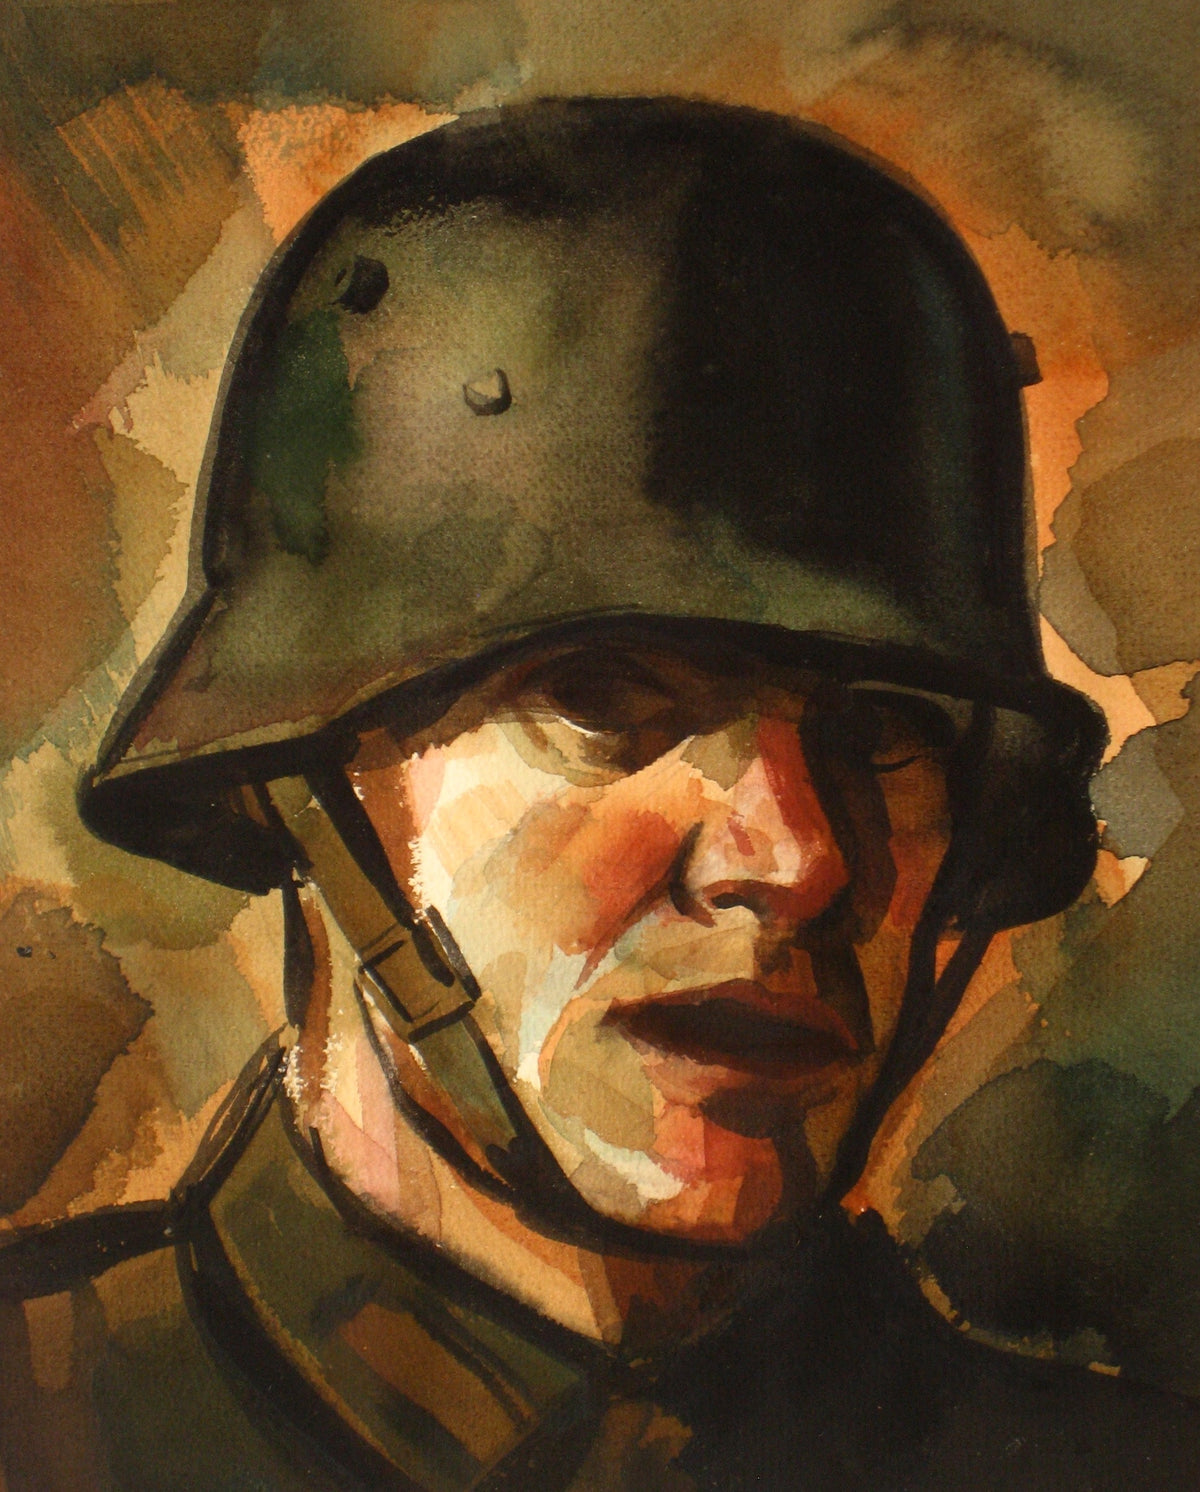 Ready for Battle&lt;br&gt;1930-60s Watercolor&lt;br&gt;&lt;br&gt;#13382